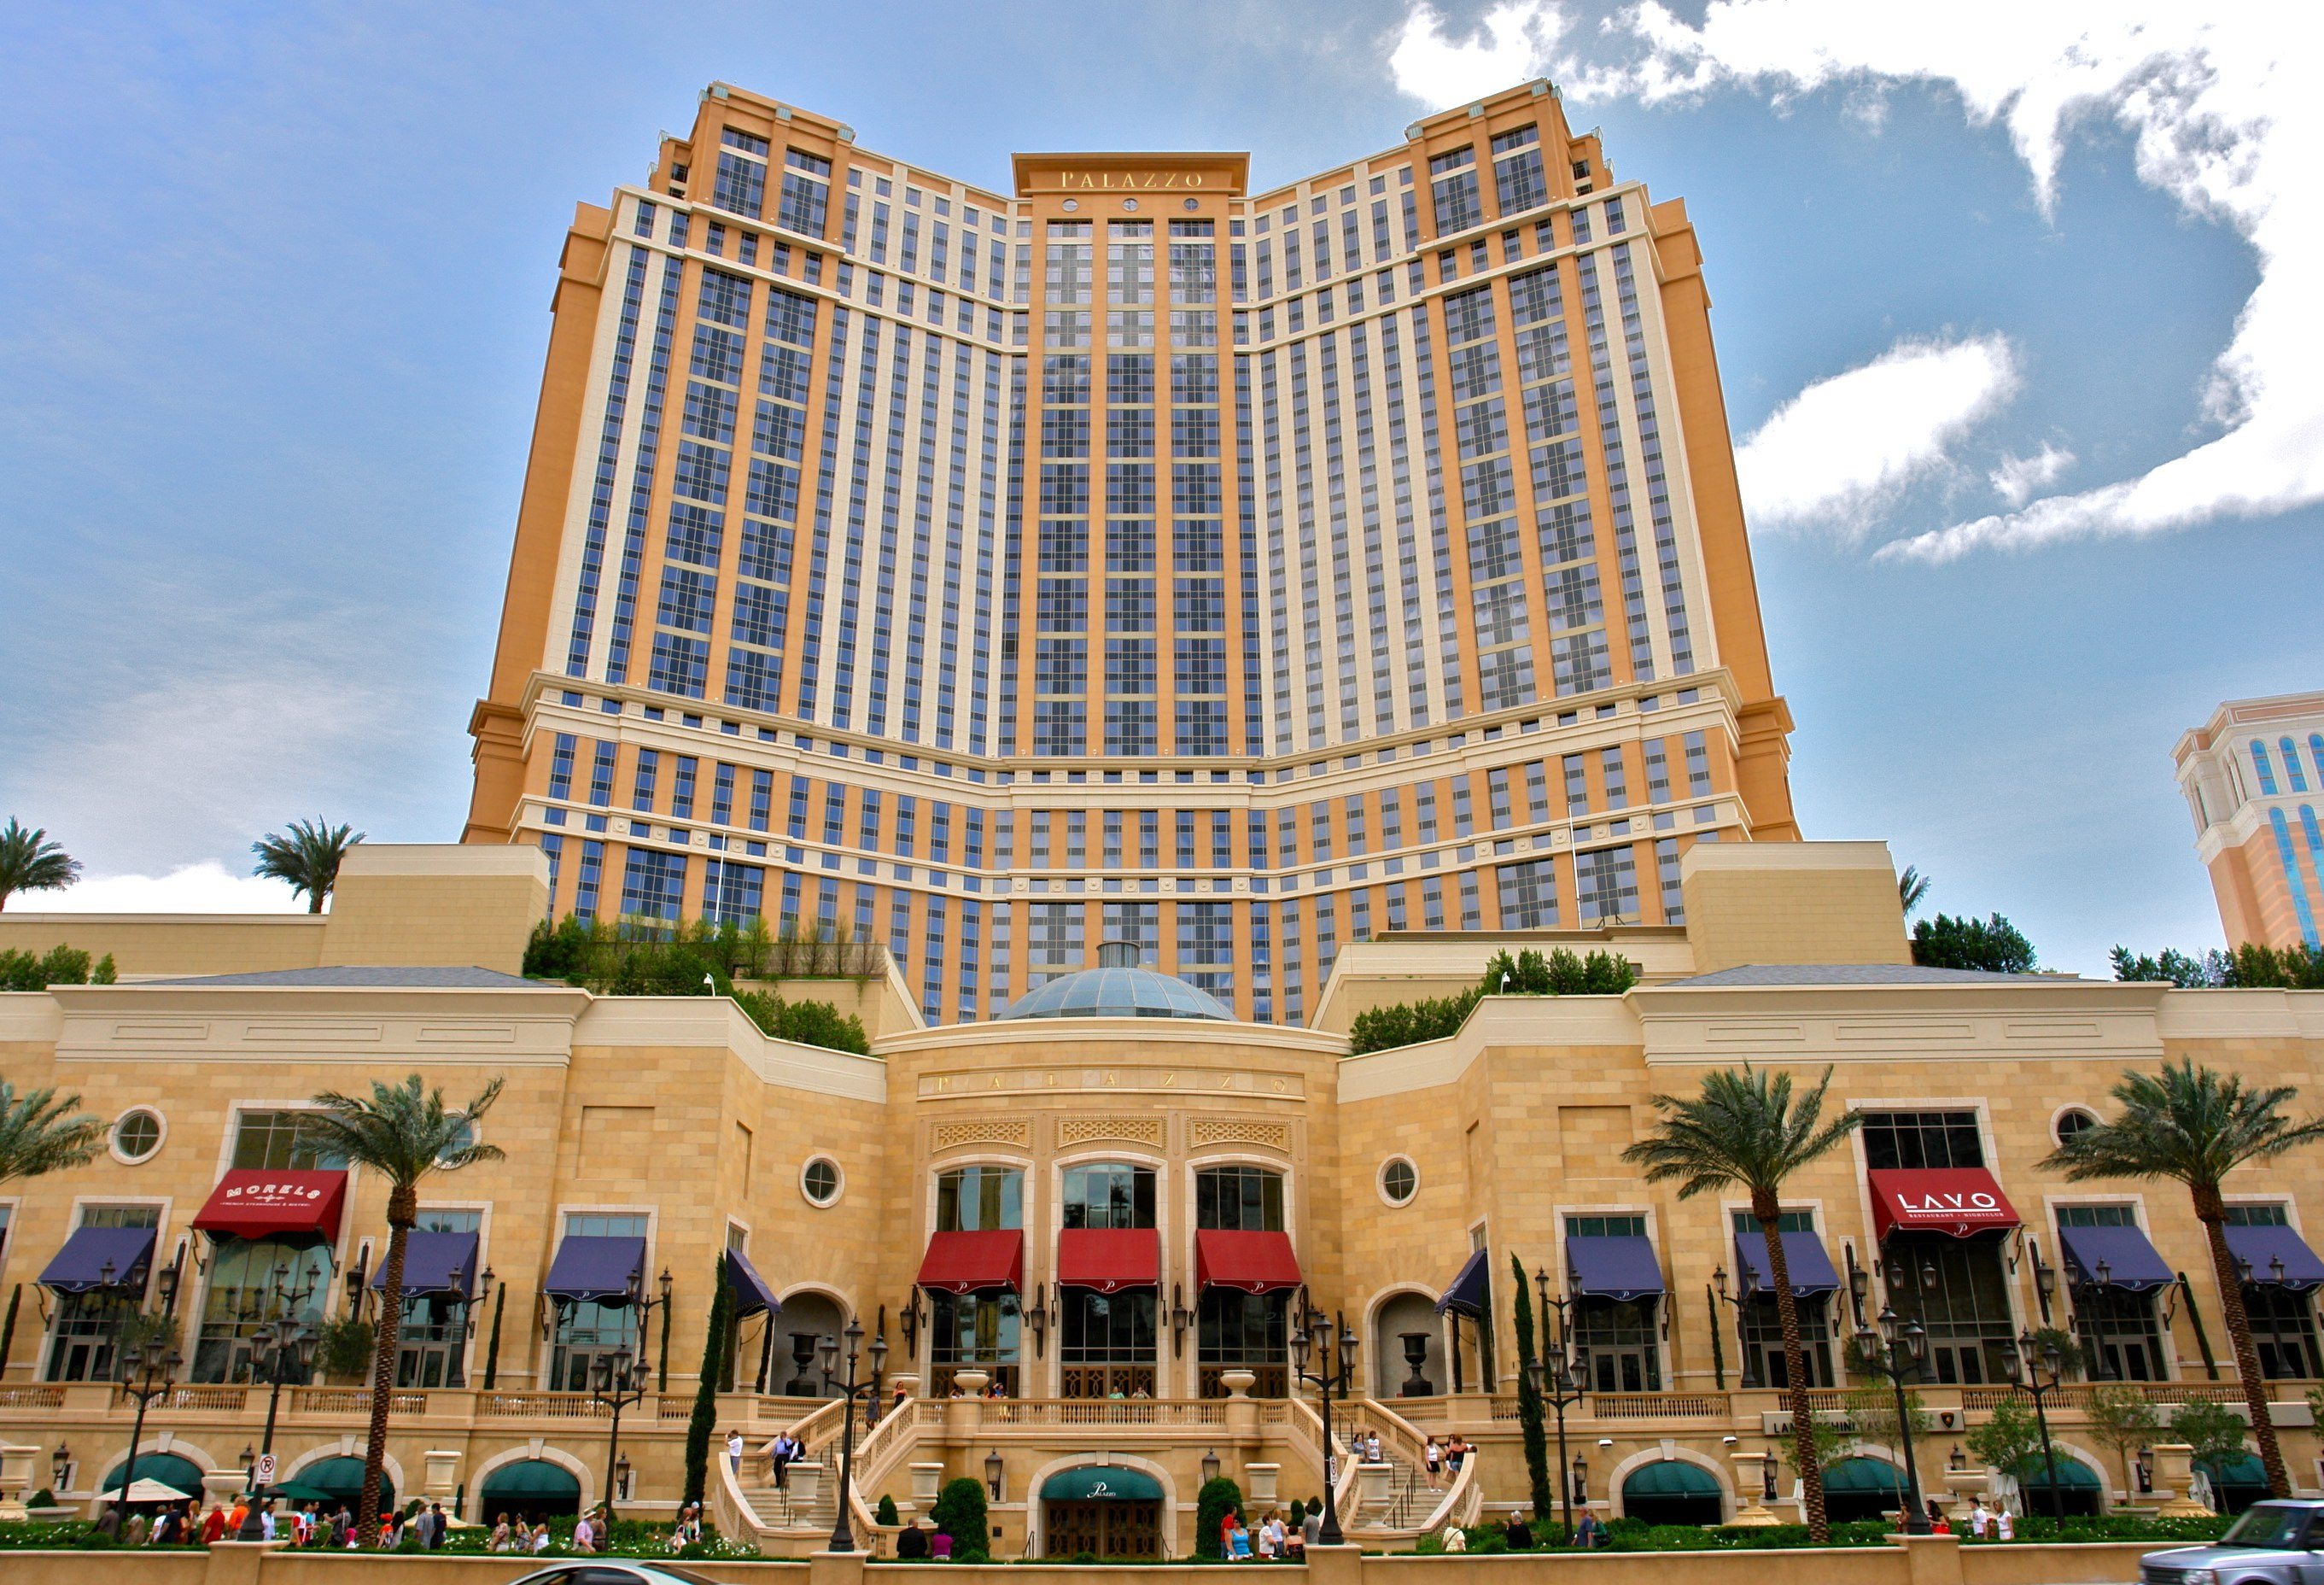 The Palazzo Vegas